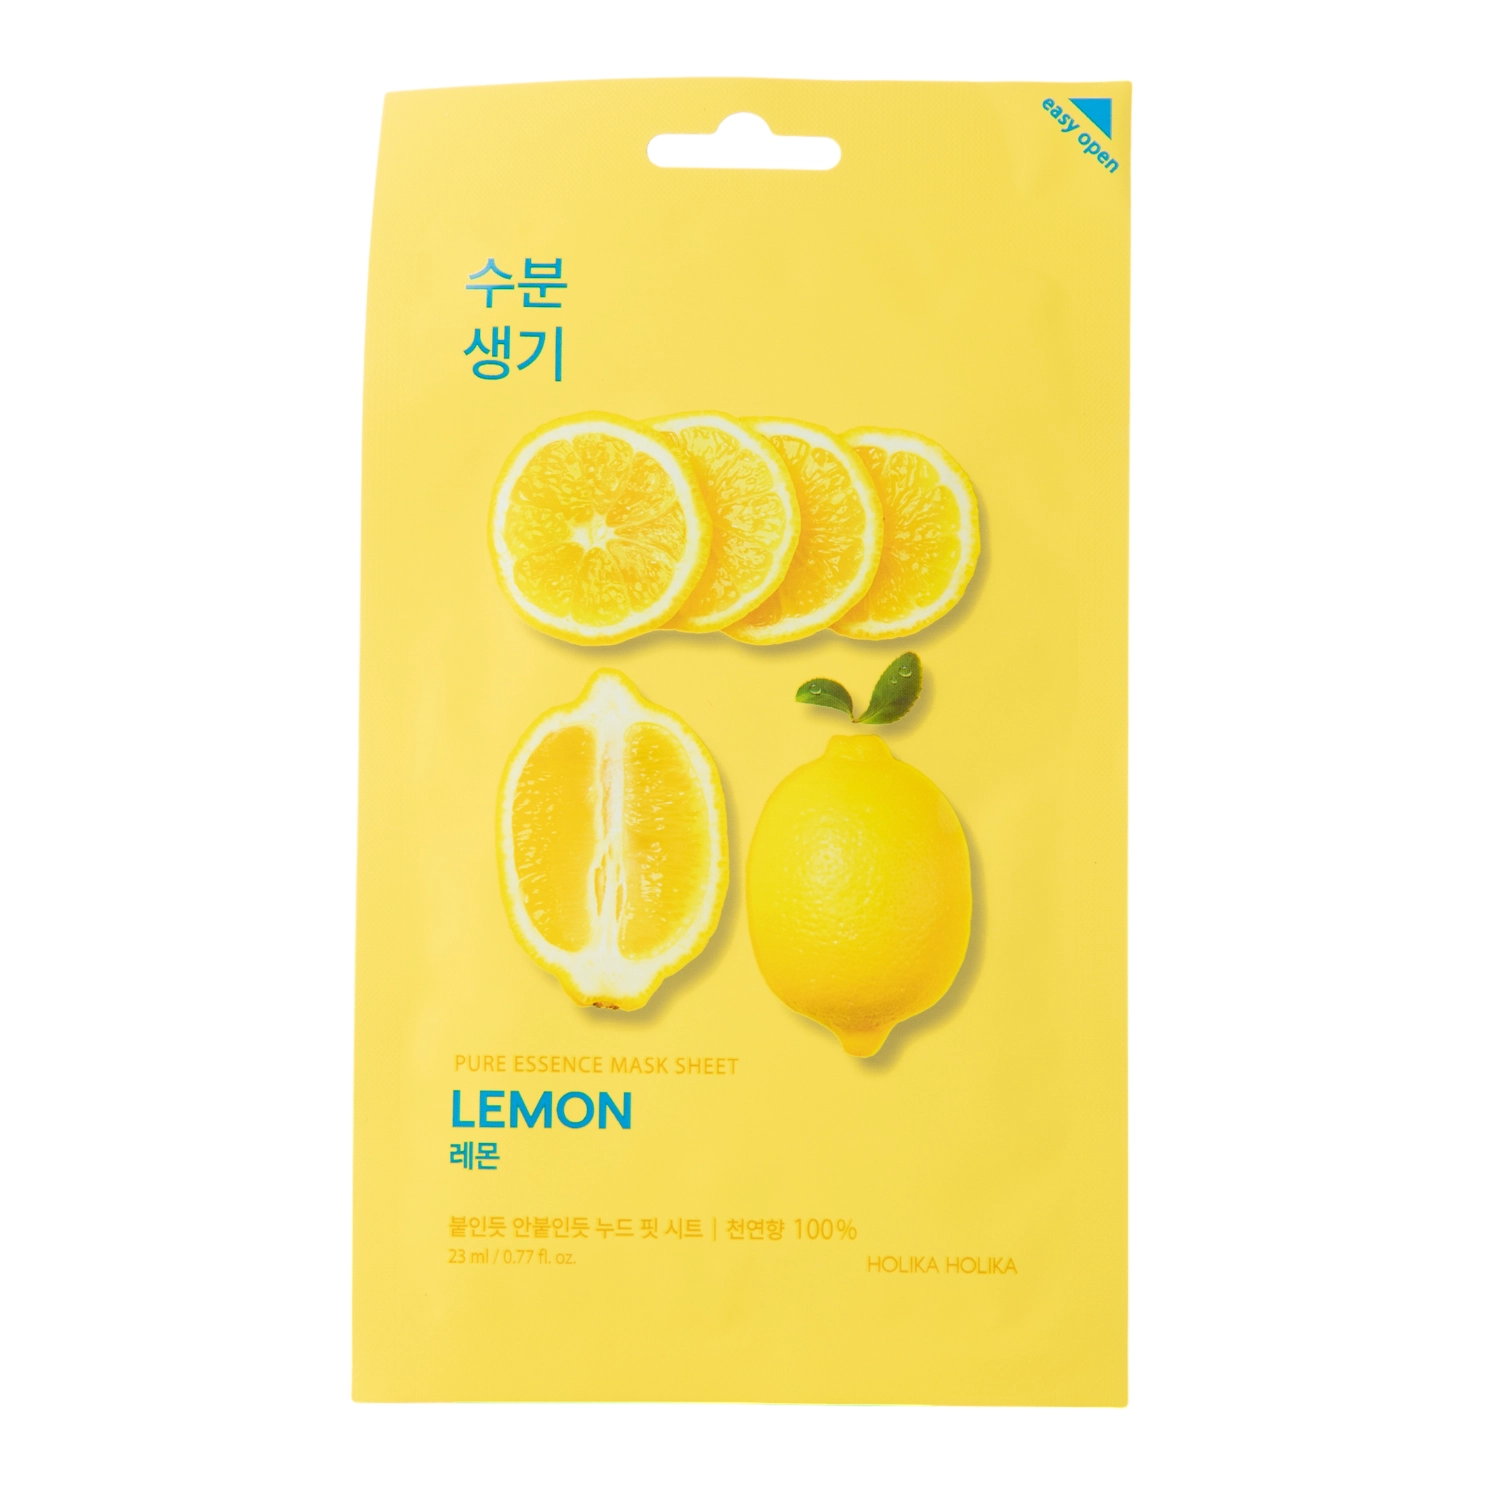 Holika Holika - Pure Essence Mask Sheet - Lemon - Осветляющая тканевая маска с экстрактом лимона - 23ml